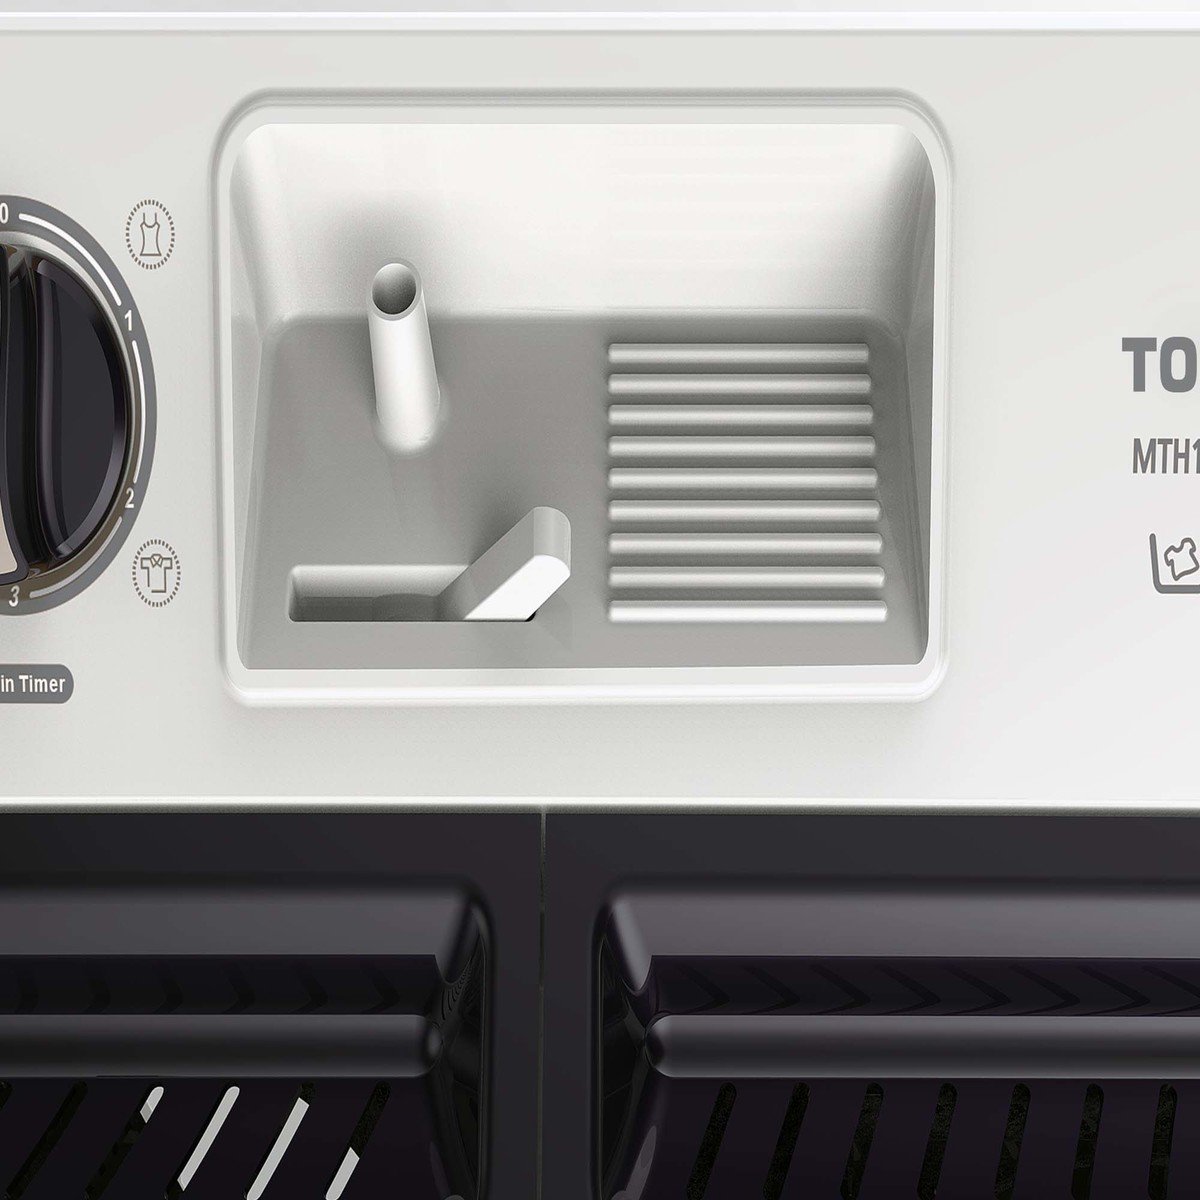 Toshiba Semi-Auto Top Load Washing Machine VH-H130WA 12Kg